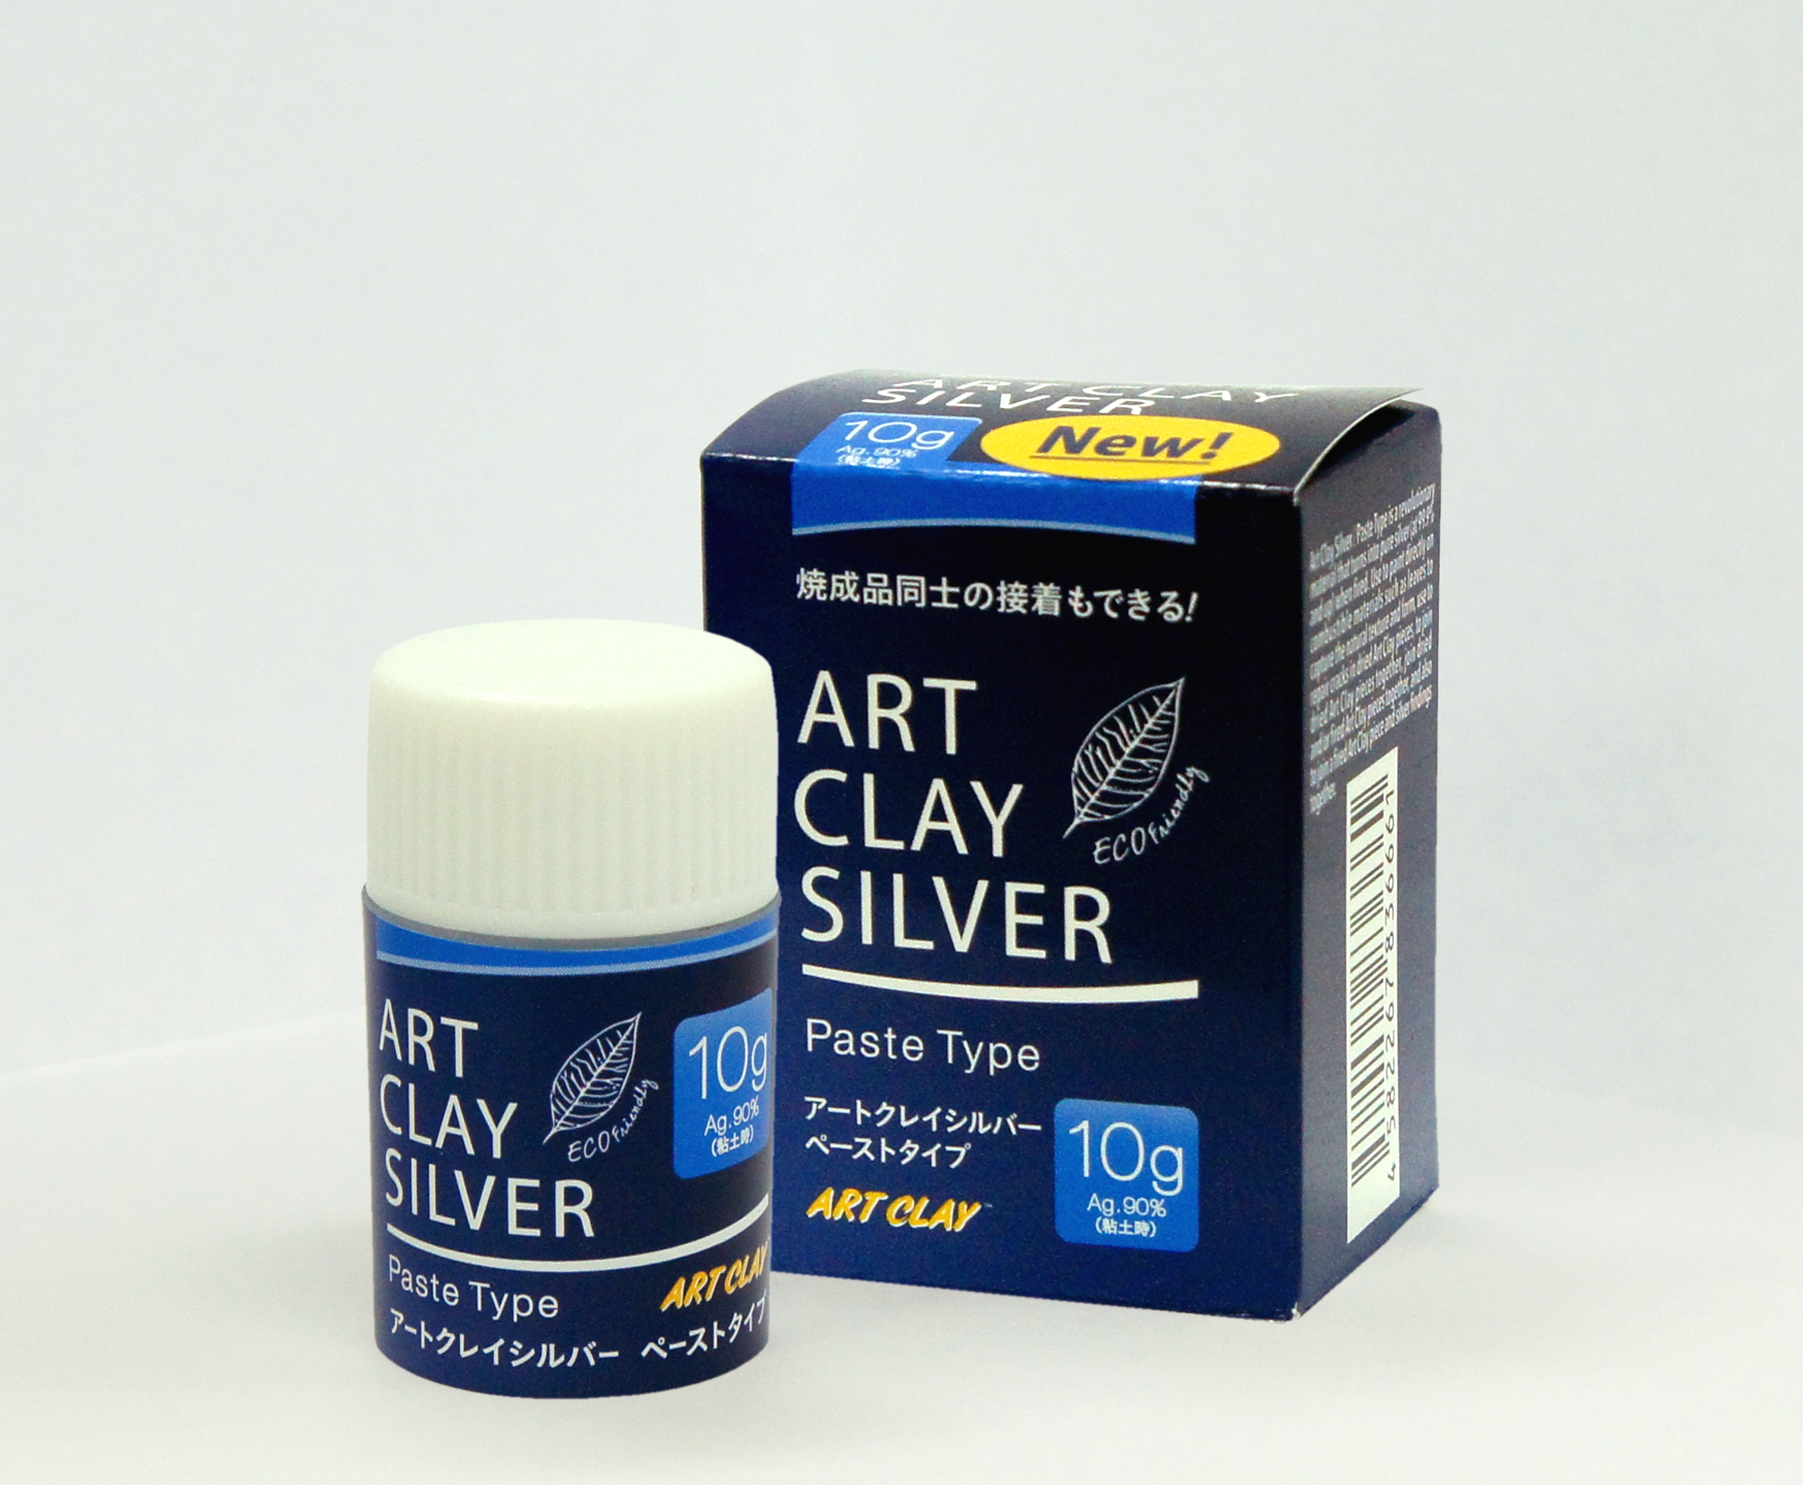 Art Clay Silver 650 New Formula - pasta,10g